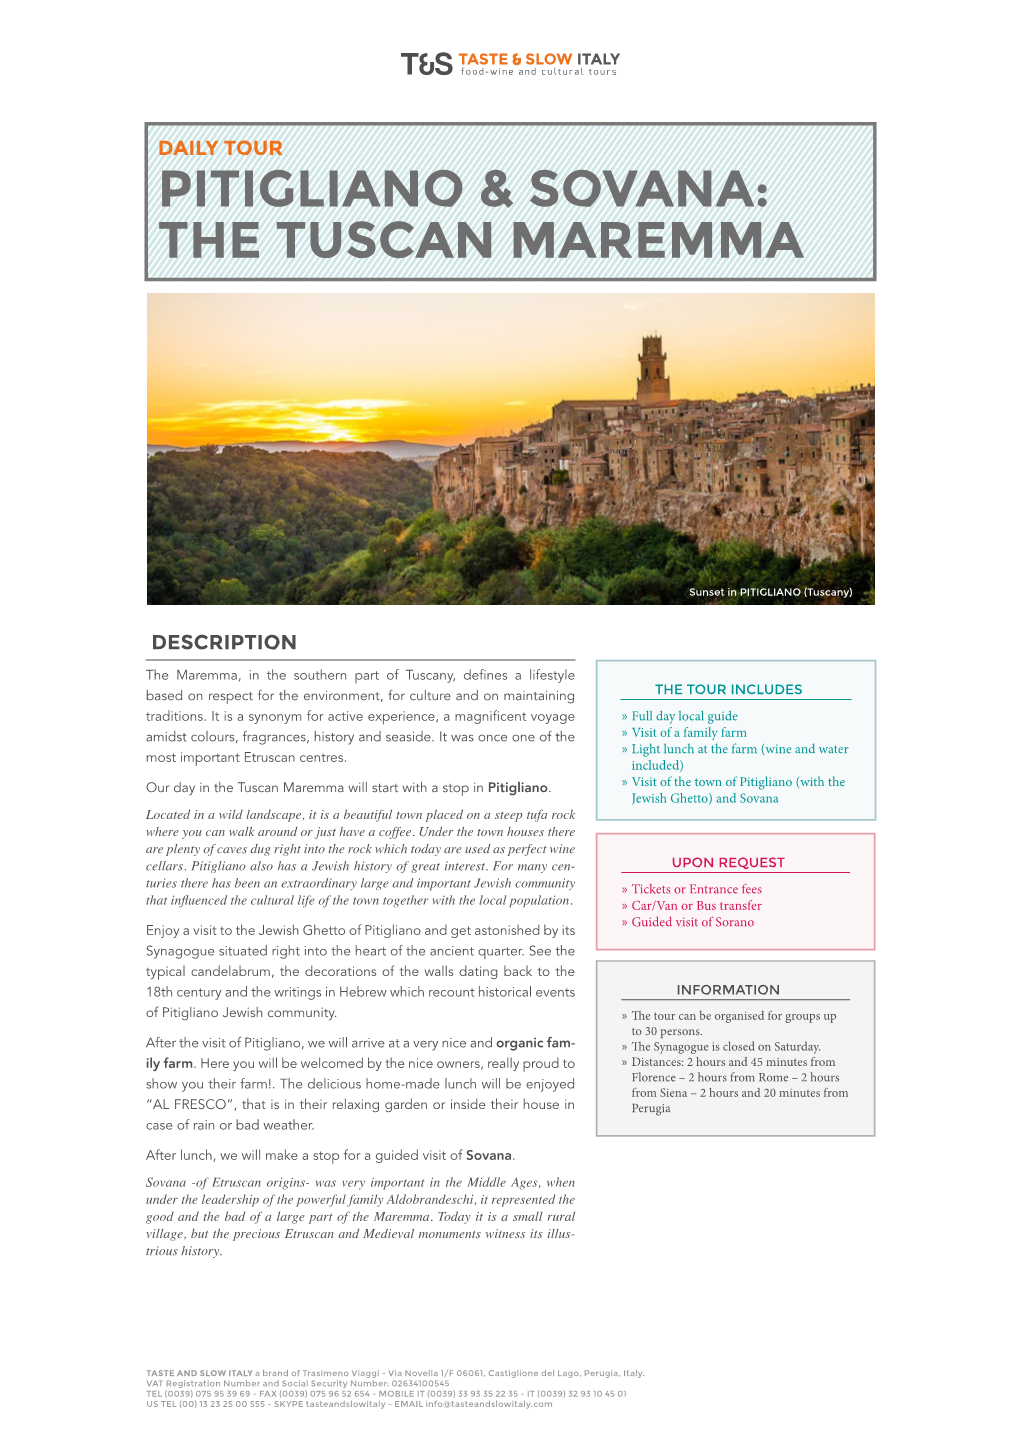 Pitigliano & Sovana: the Tuscan Maremma